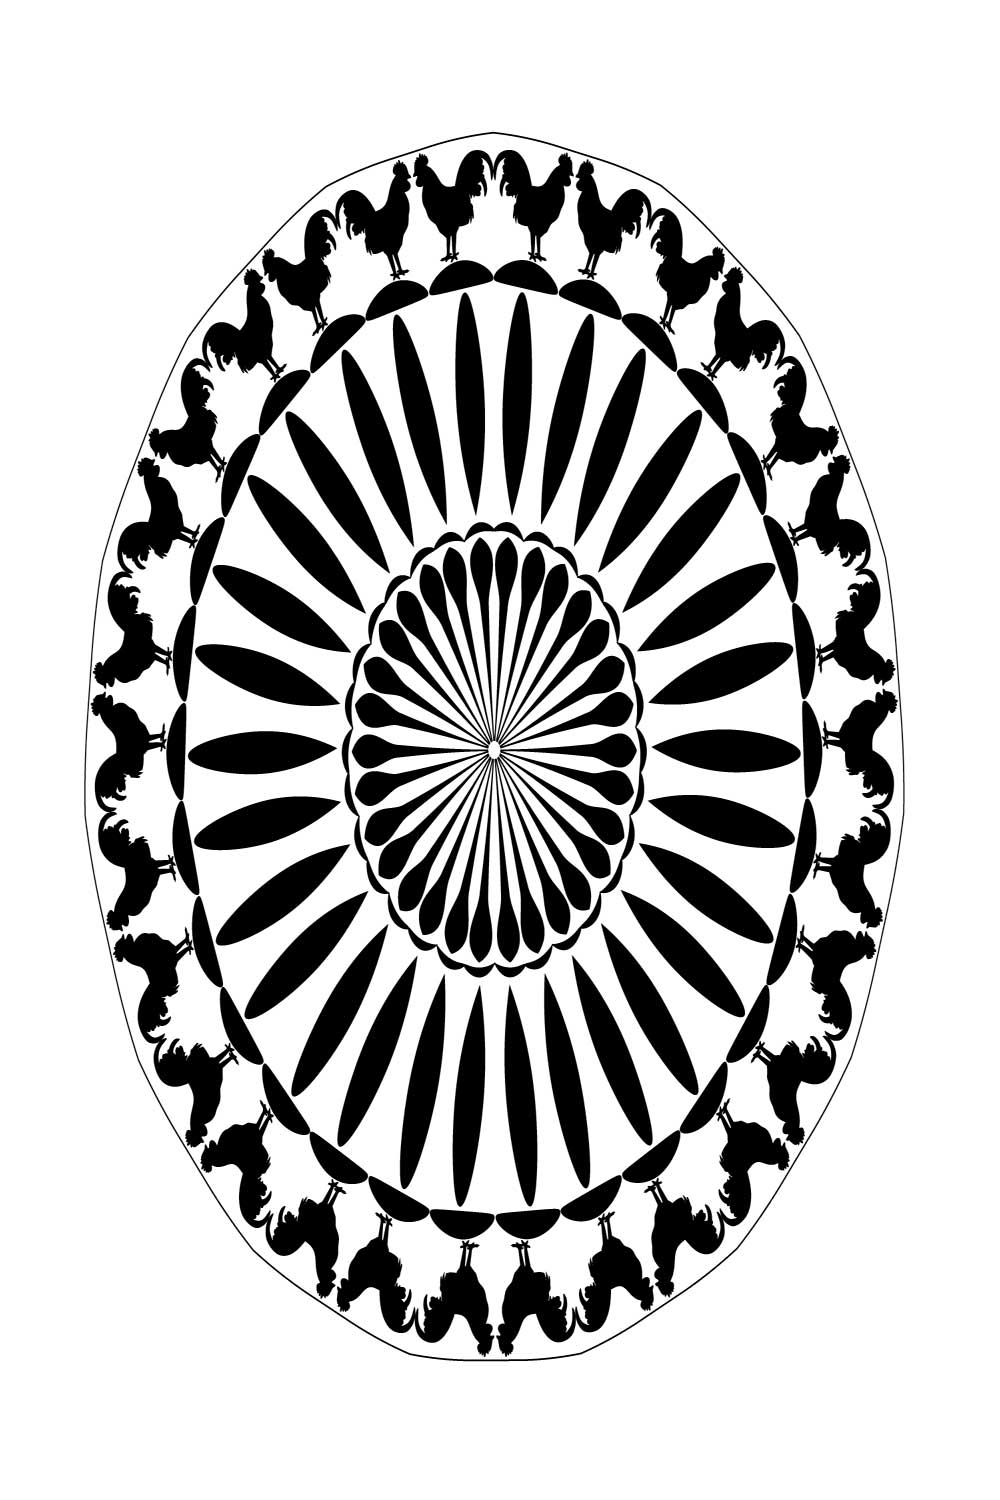 Mandala Art cock in blak and white circles pinterest preview image.